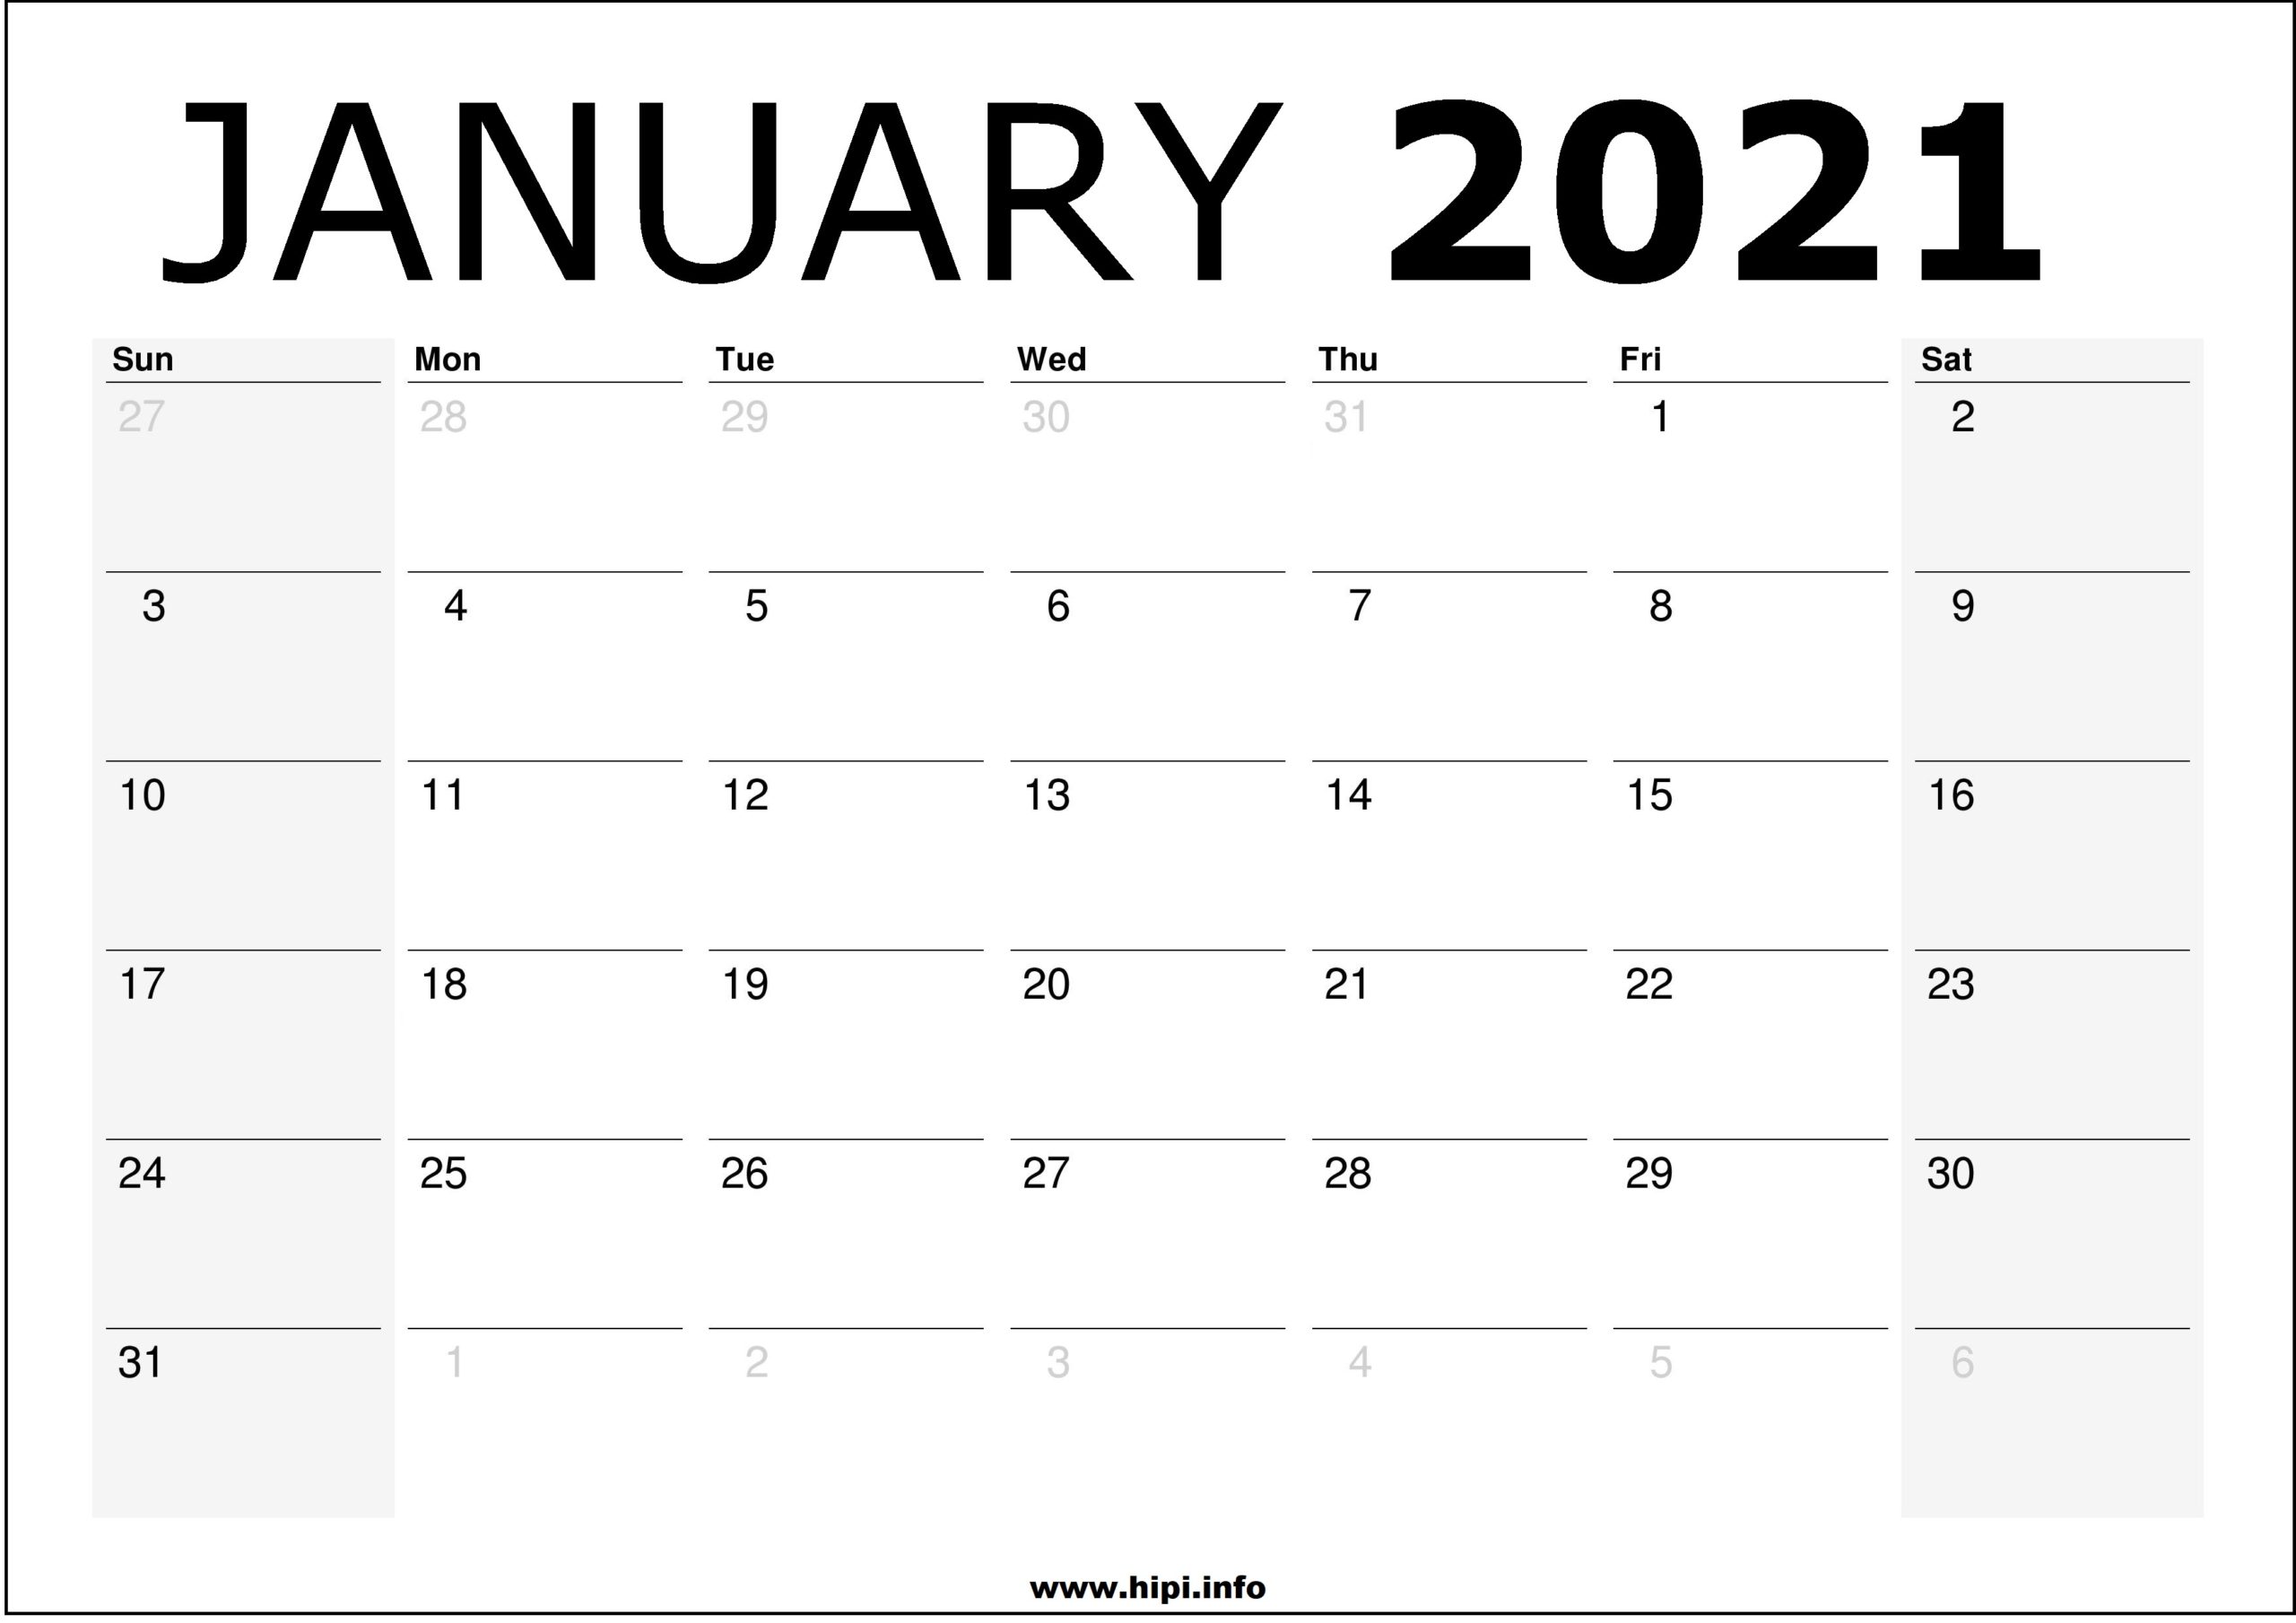 january-2021-calendar-printable-monthly-calendar-free-download-hipi